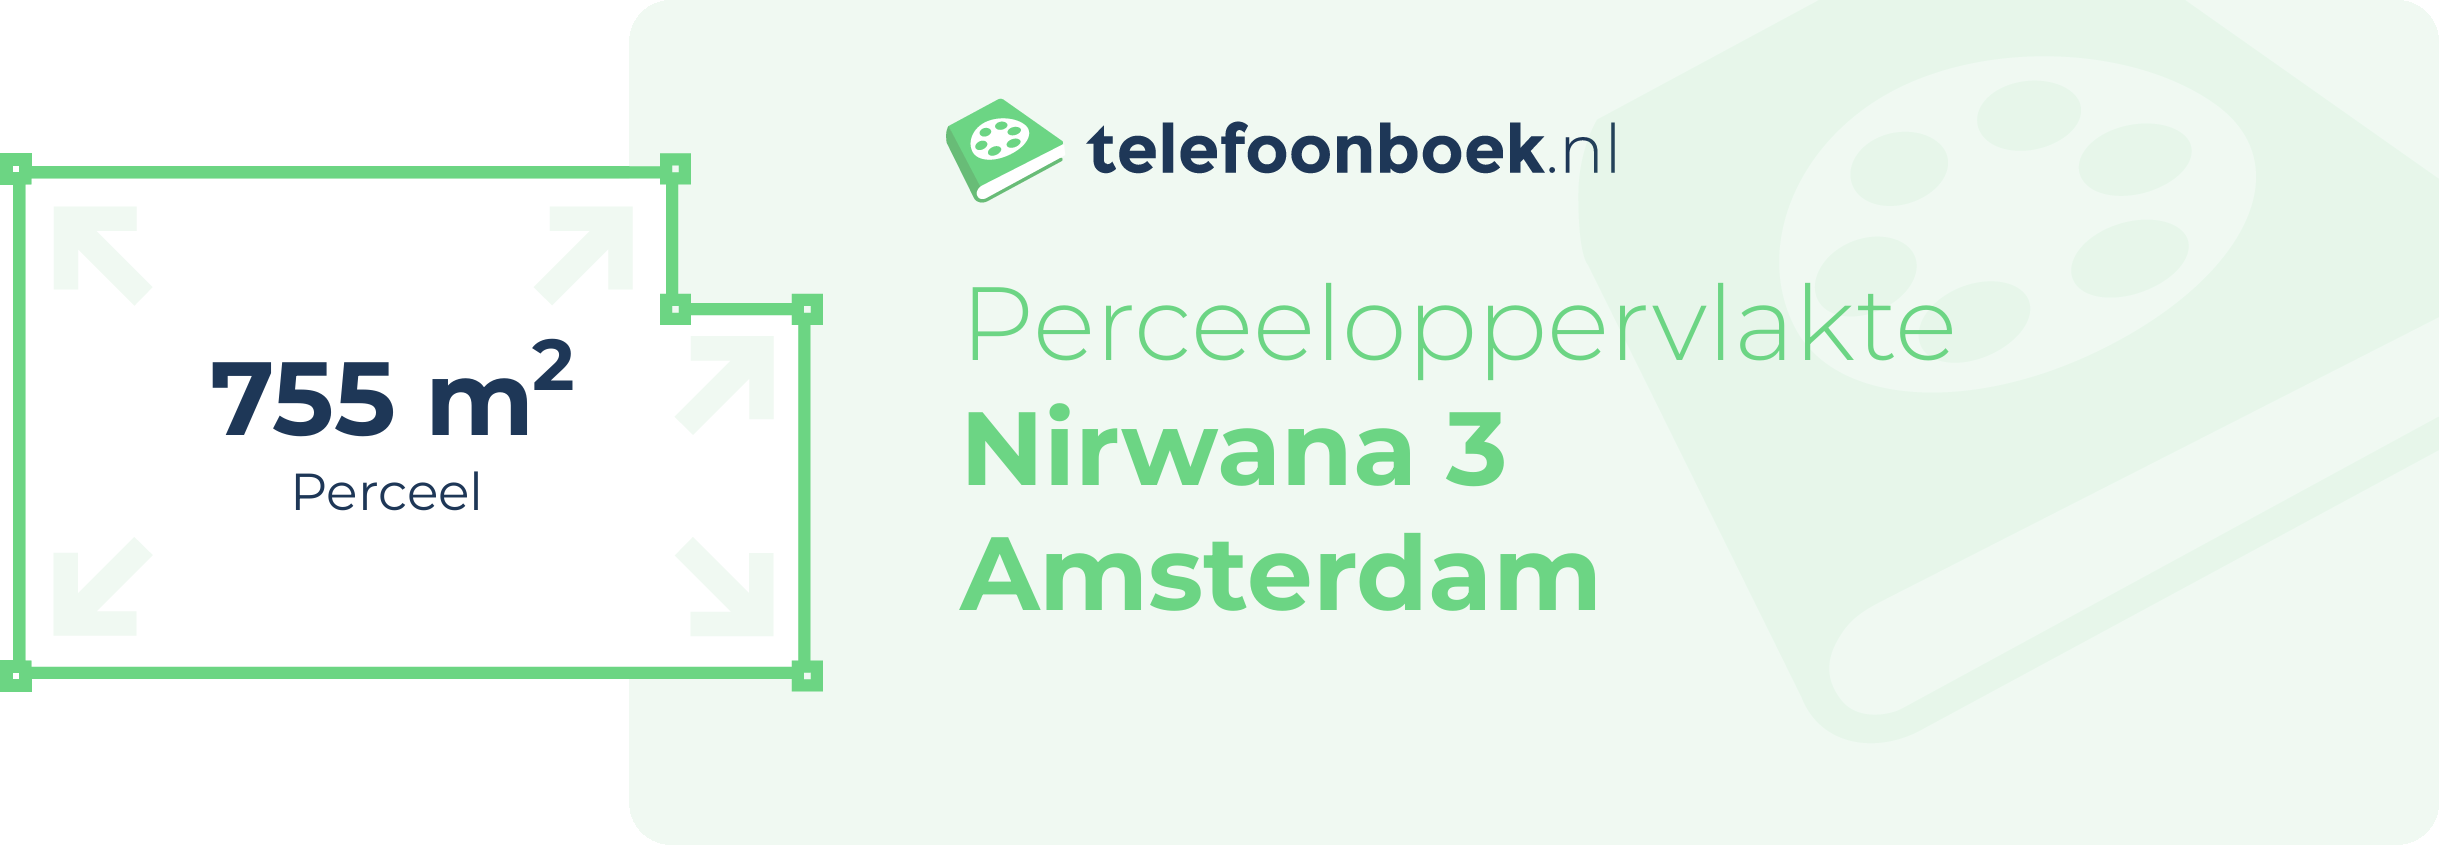 Perceeloppervlakte Nirwana 3 Amsterdam